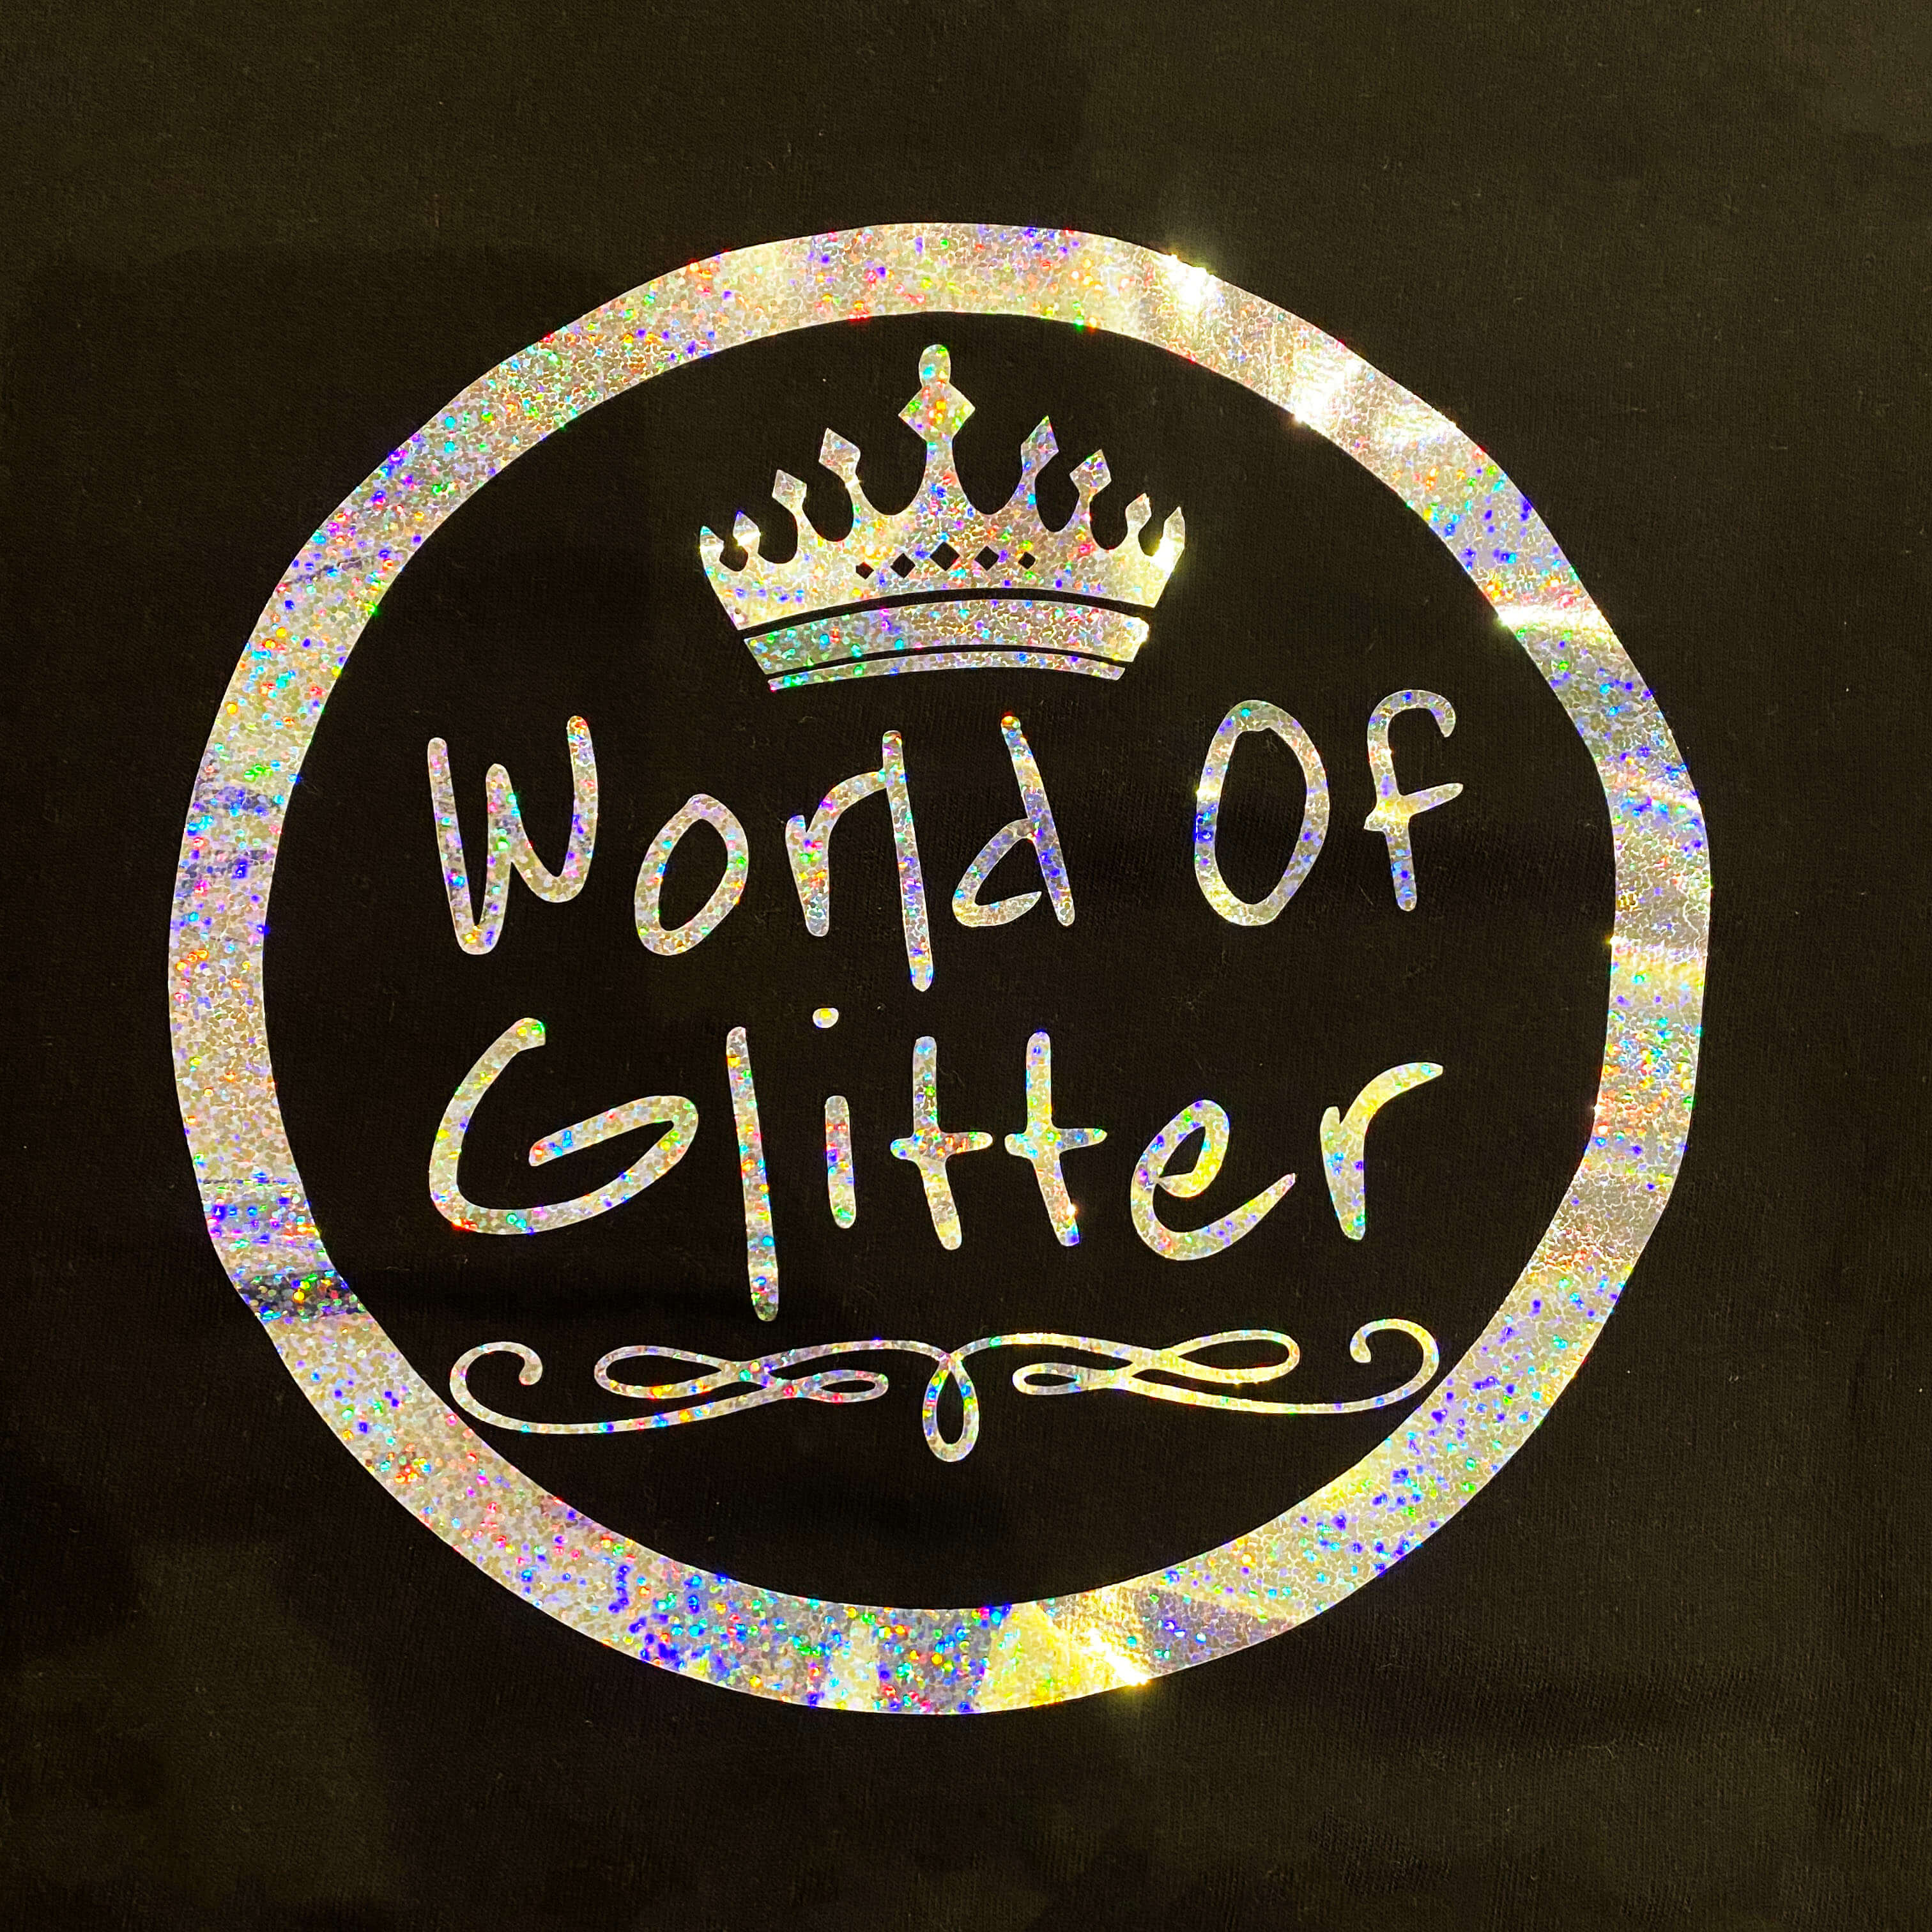 World Of Glitter Black Hoodie